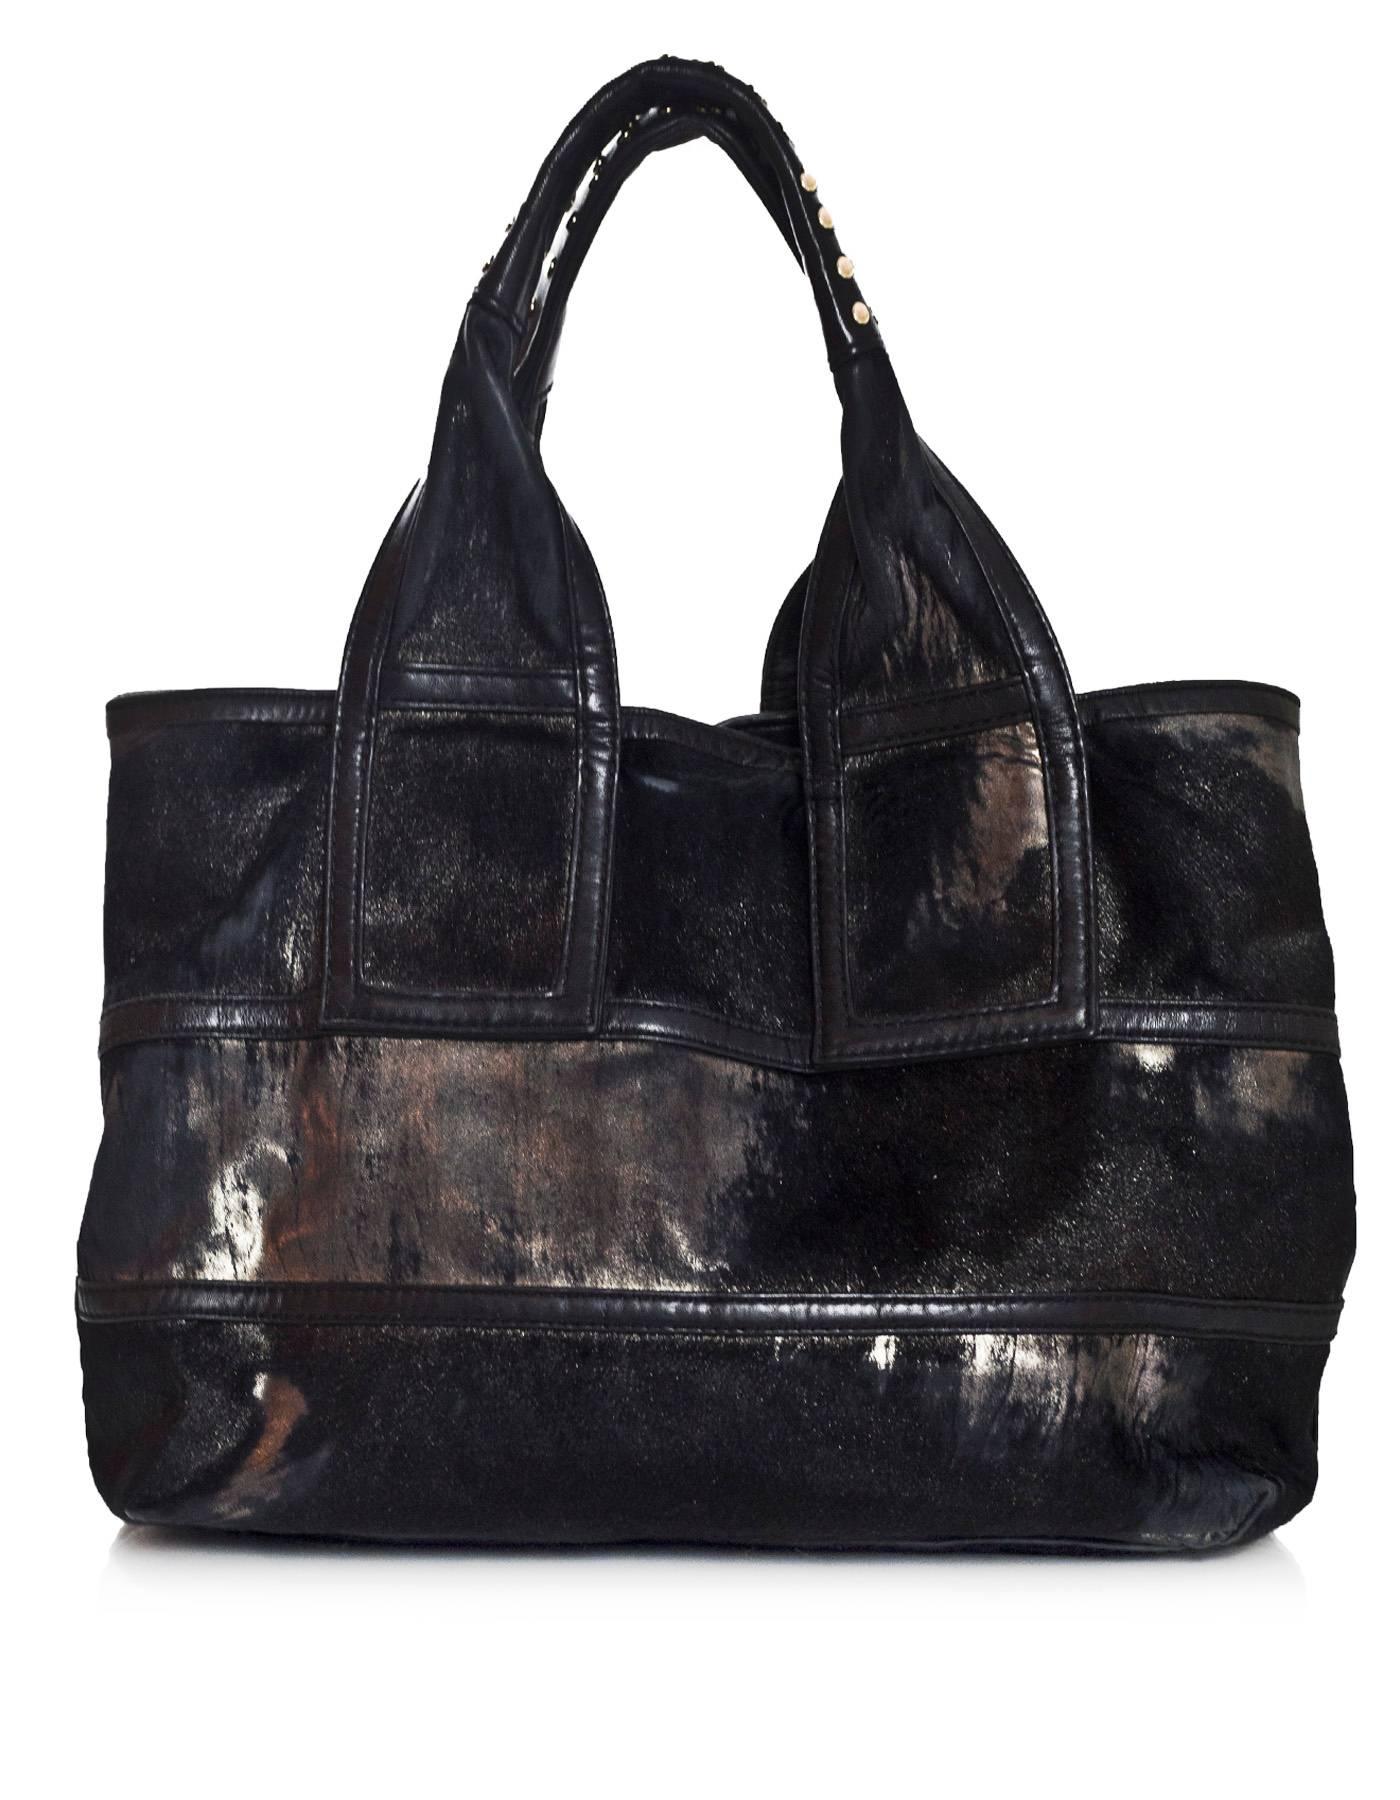 donna karan black tote bag